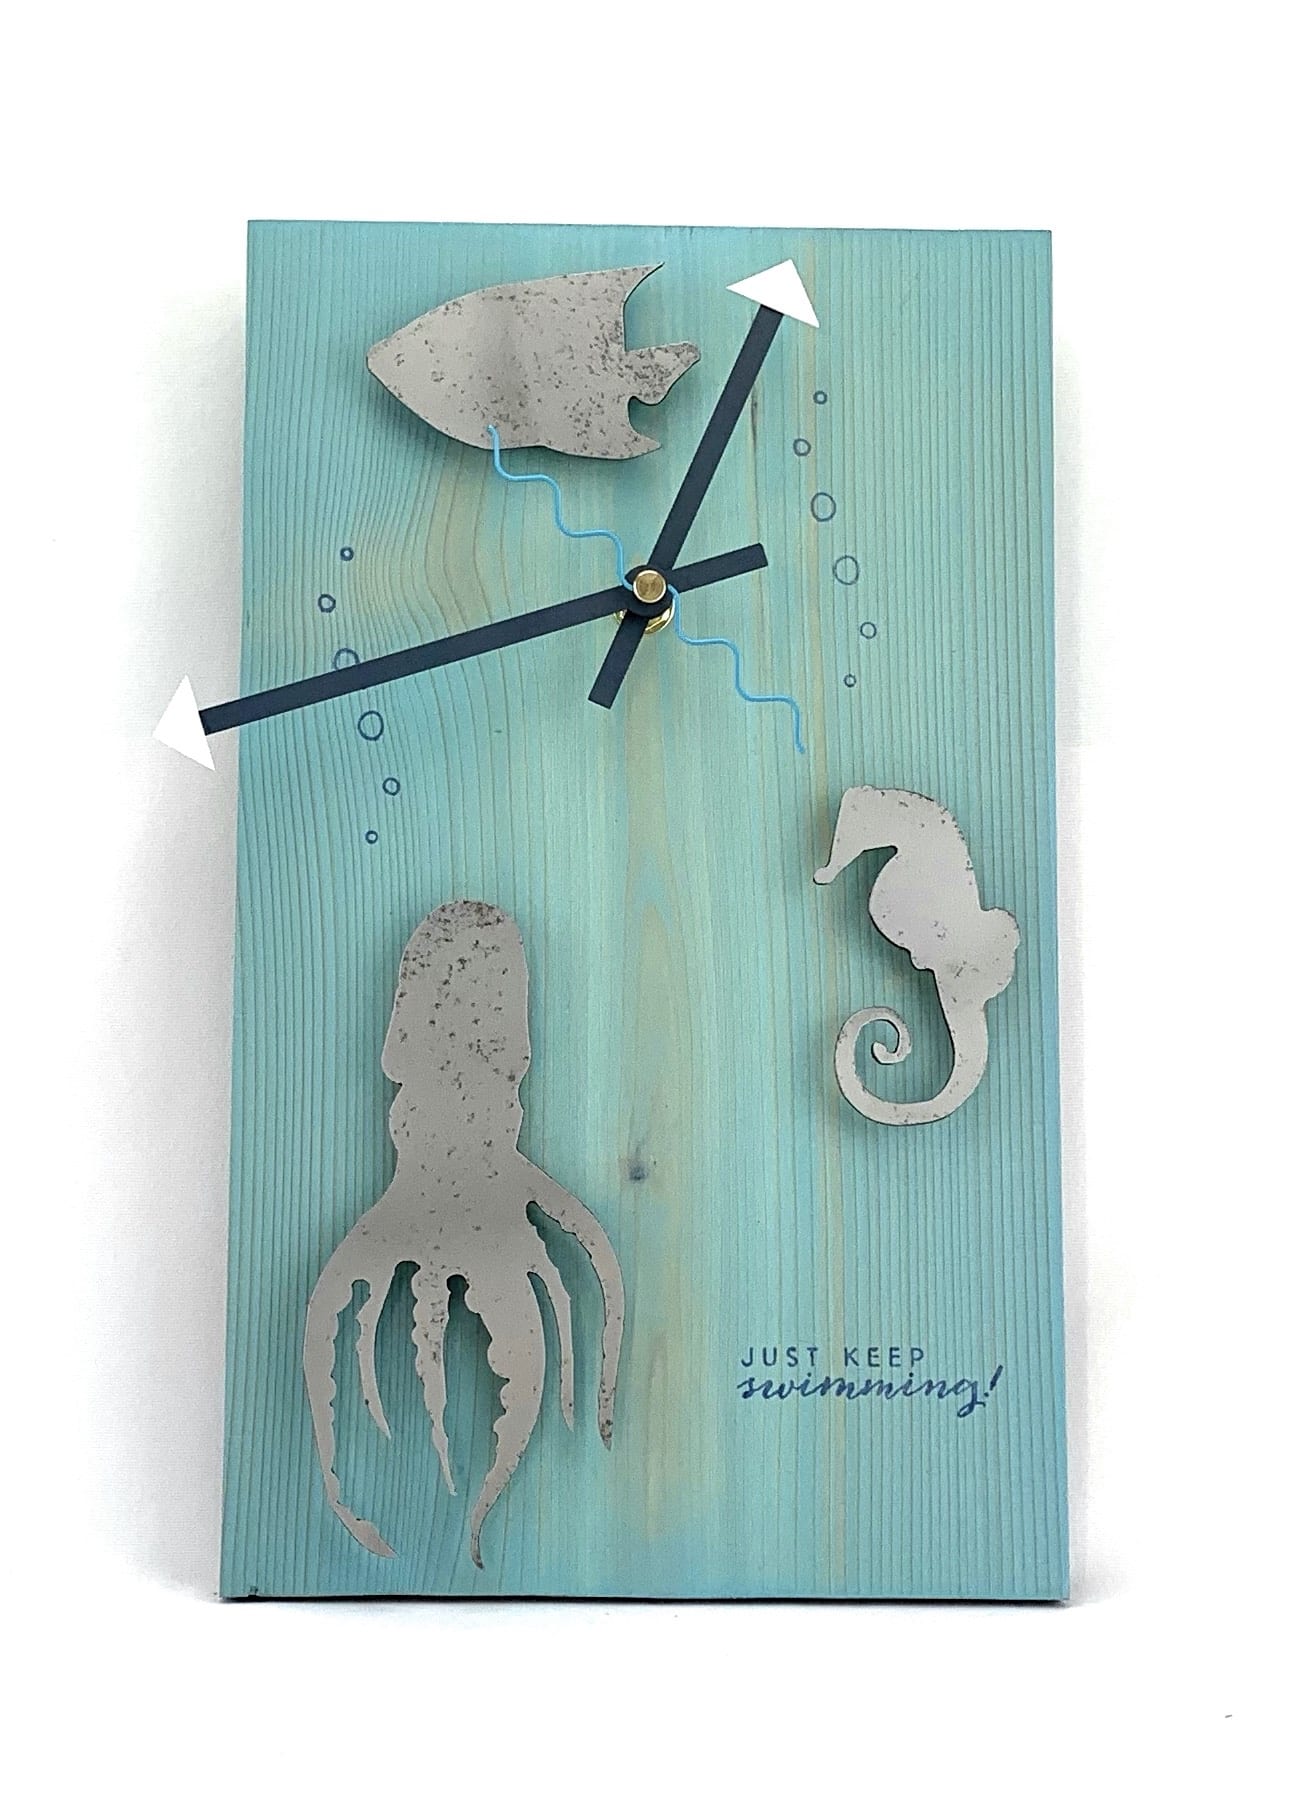 Sold KingWood Wood & Metal Wall Clock "Just Keep Swimming" 